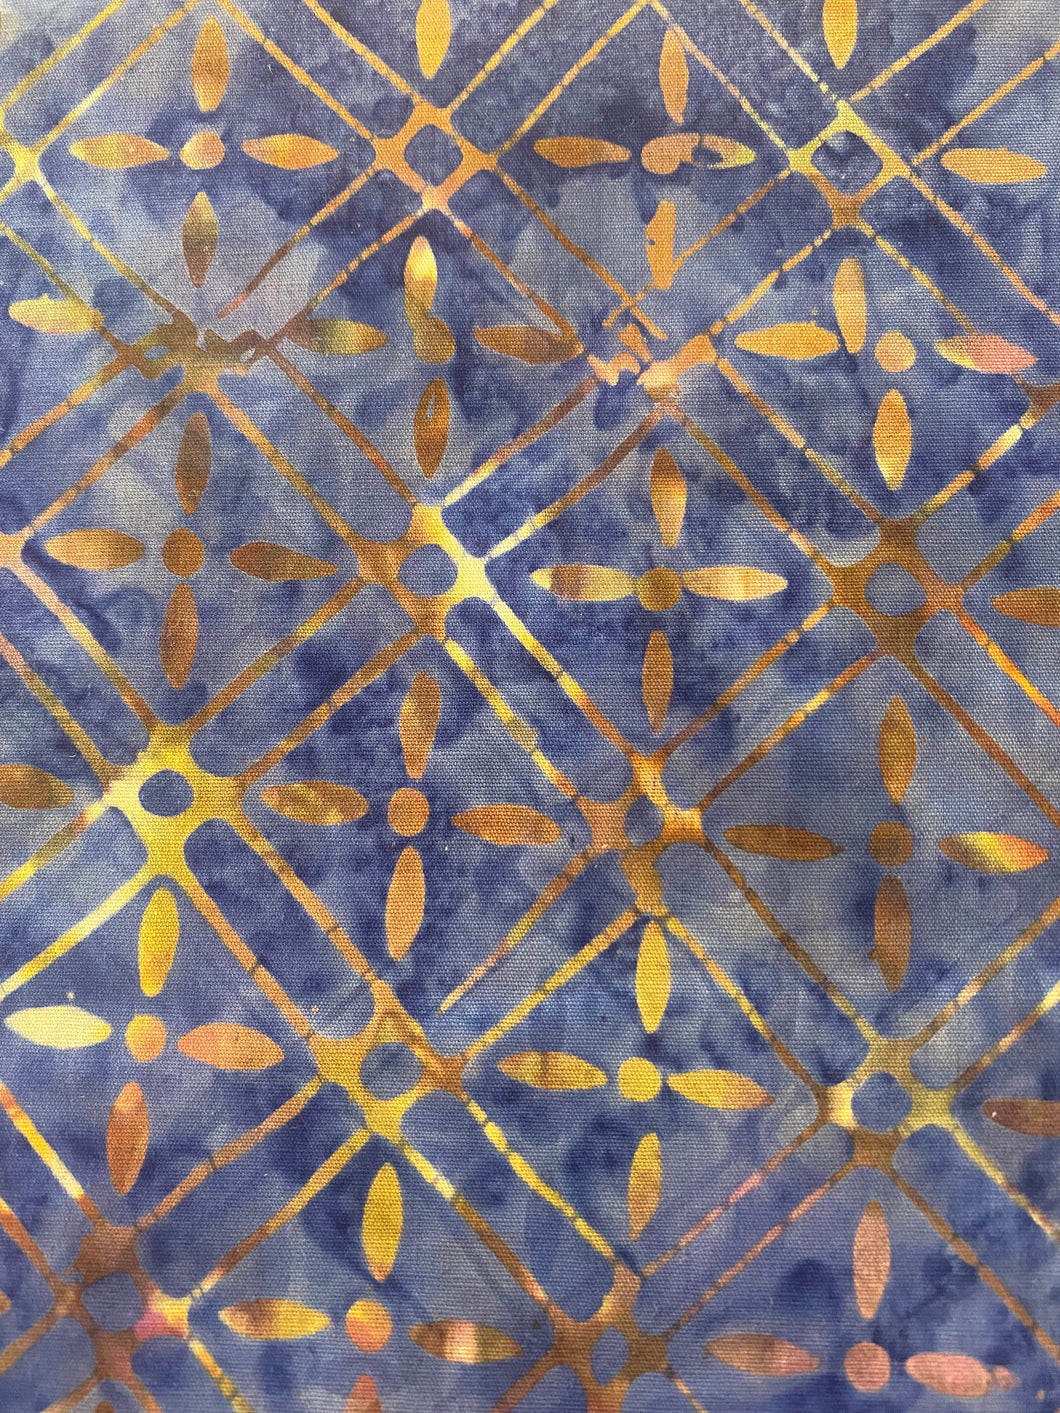 Blue/Gold pattern